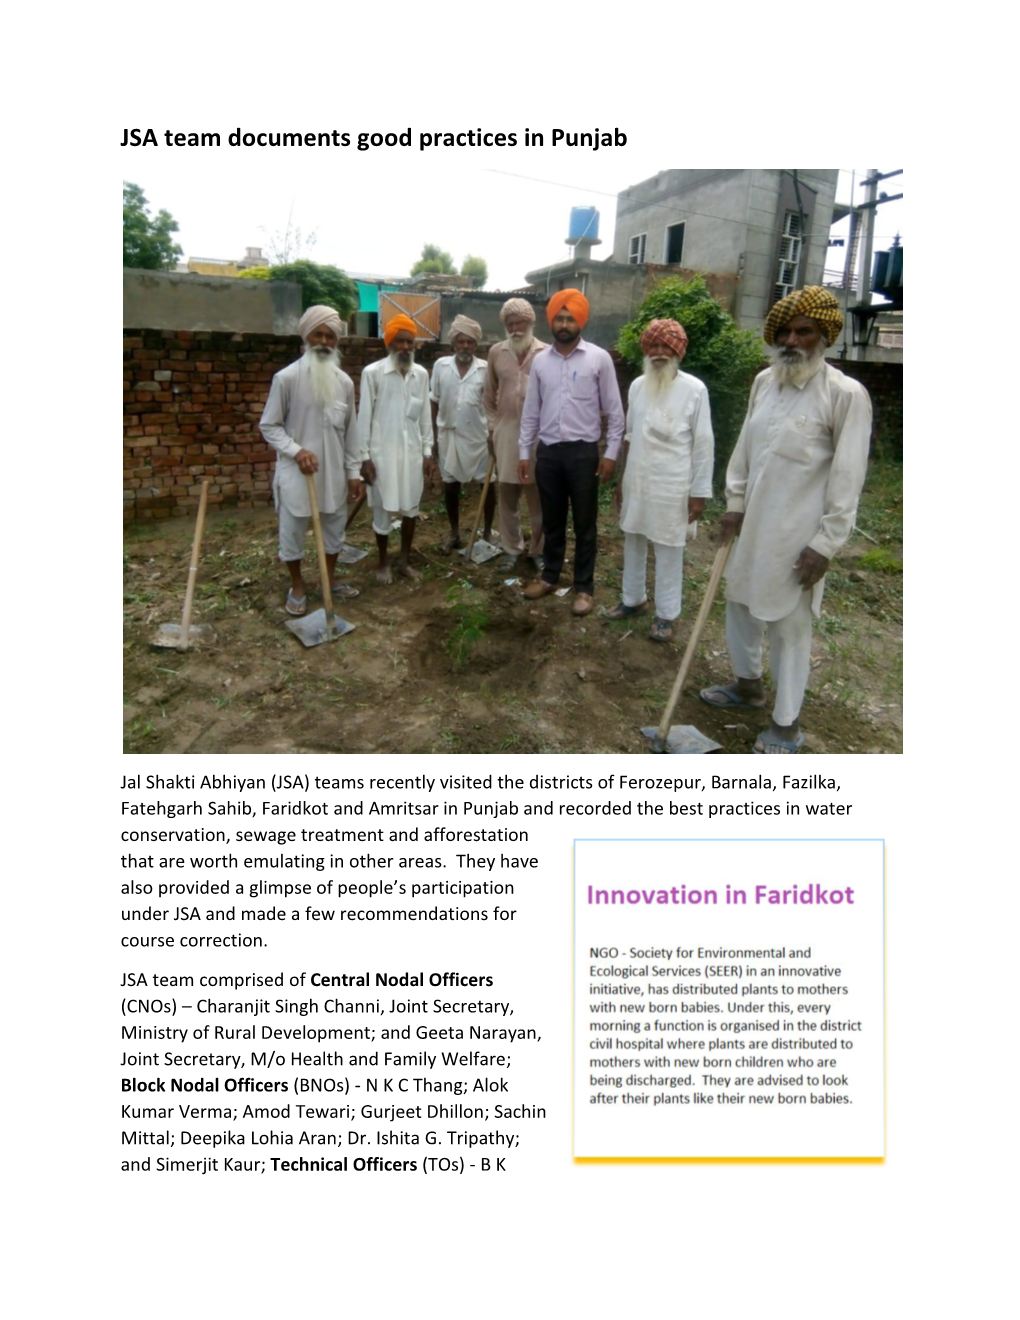 JSA Team Documents Good Practices in Punjab